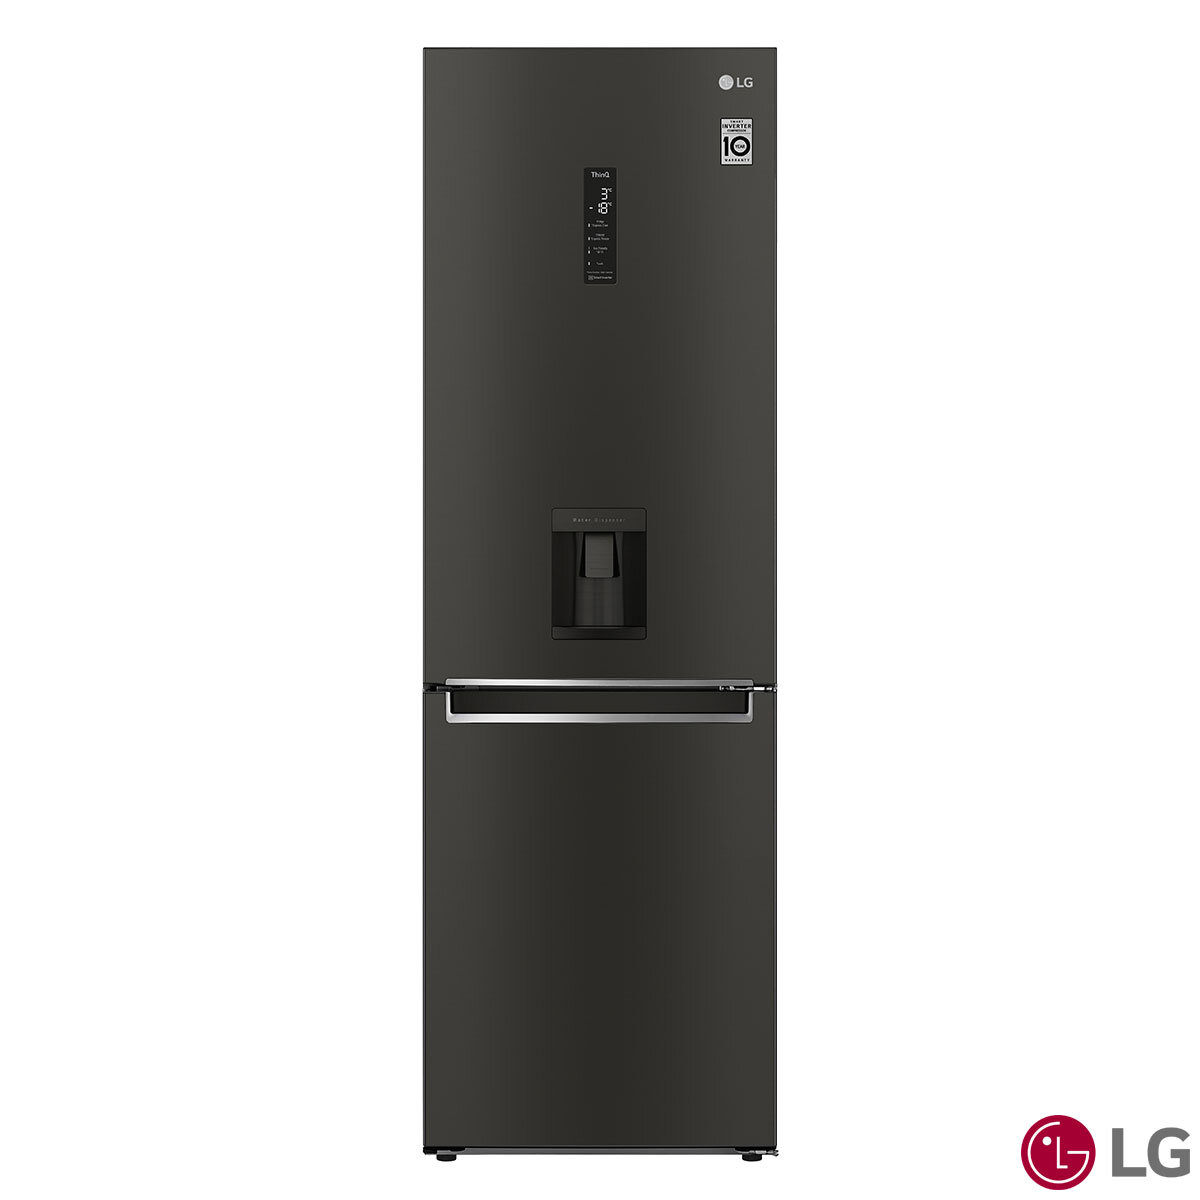 LG Fridge Freezer GBB72PZEFN 70/30 Total No Frost Stainless Steel